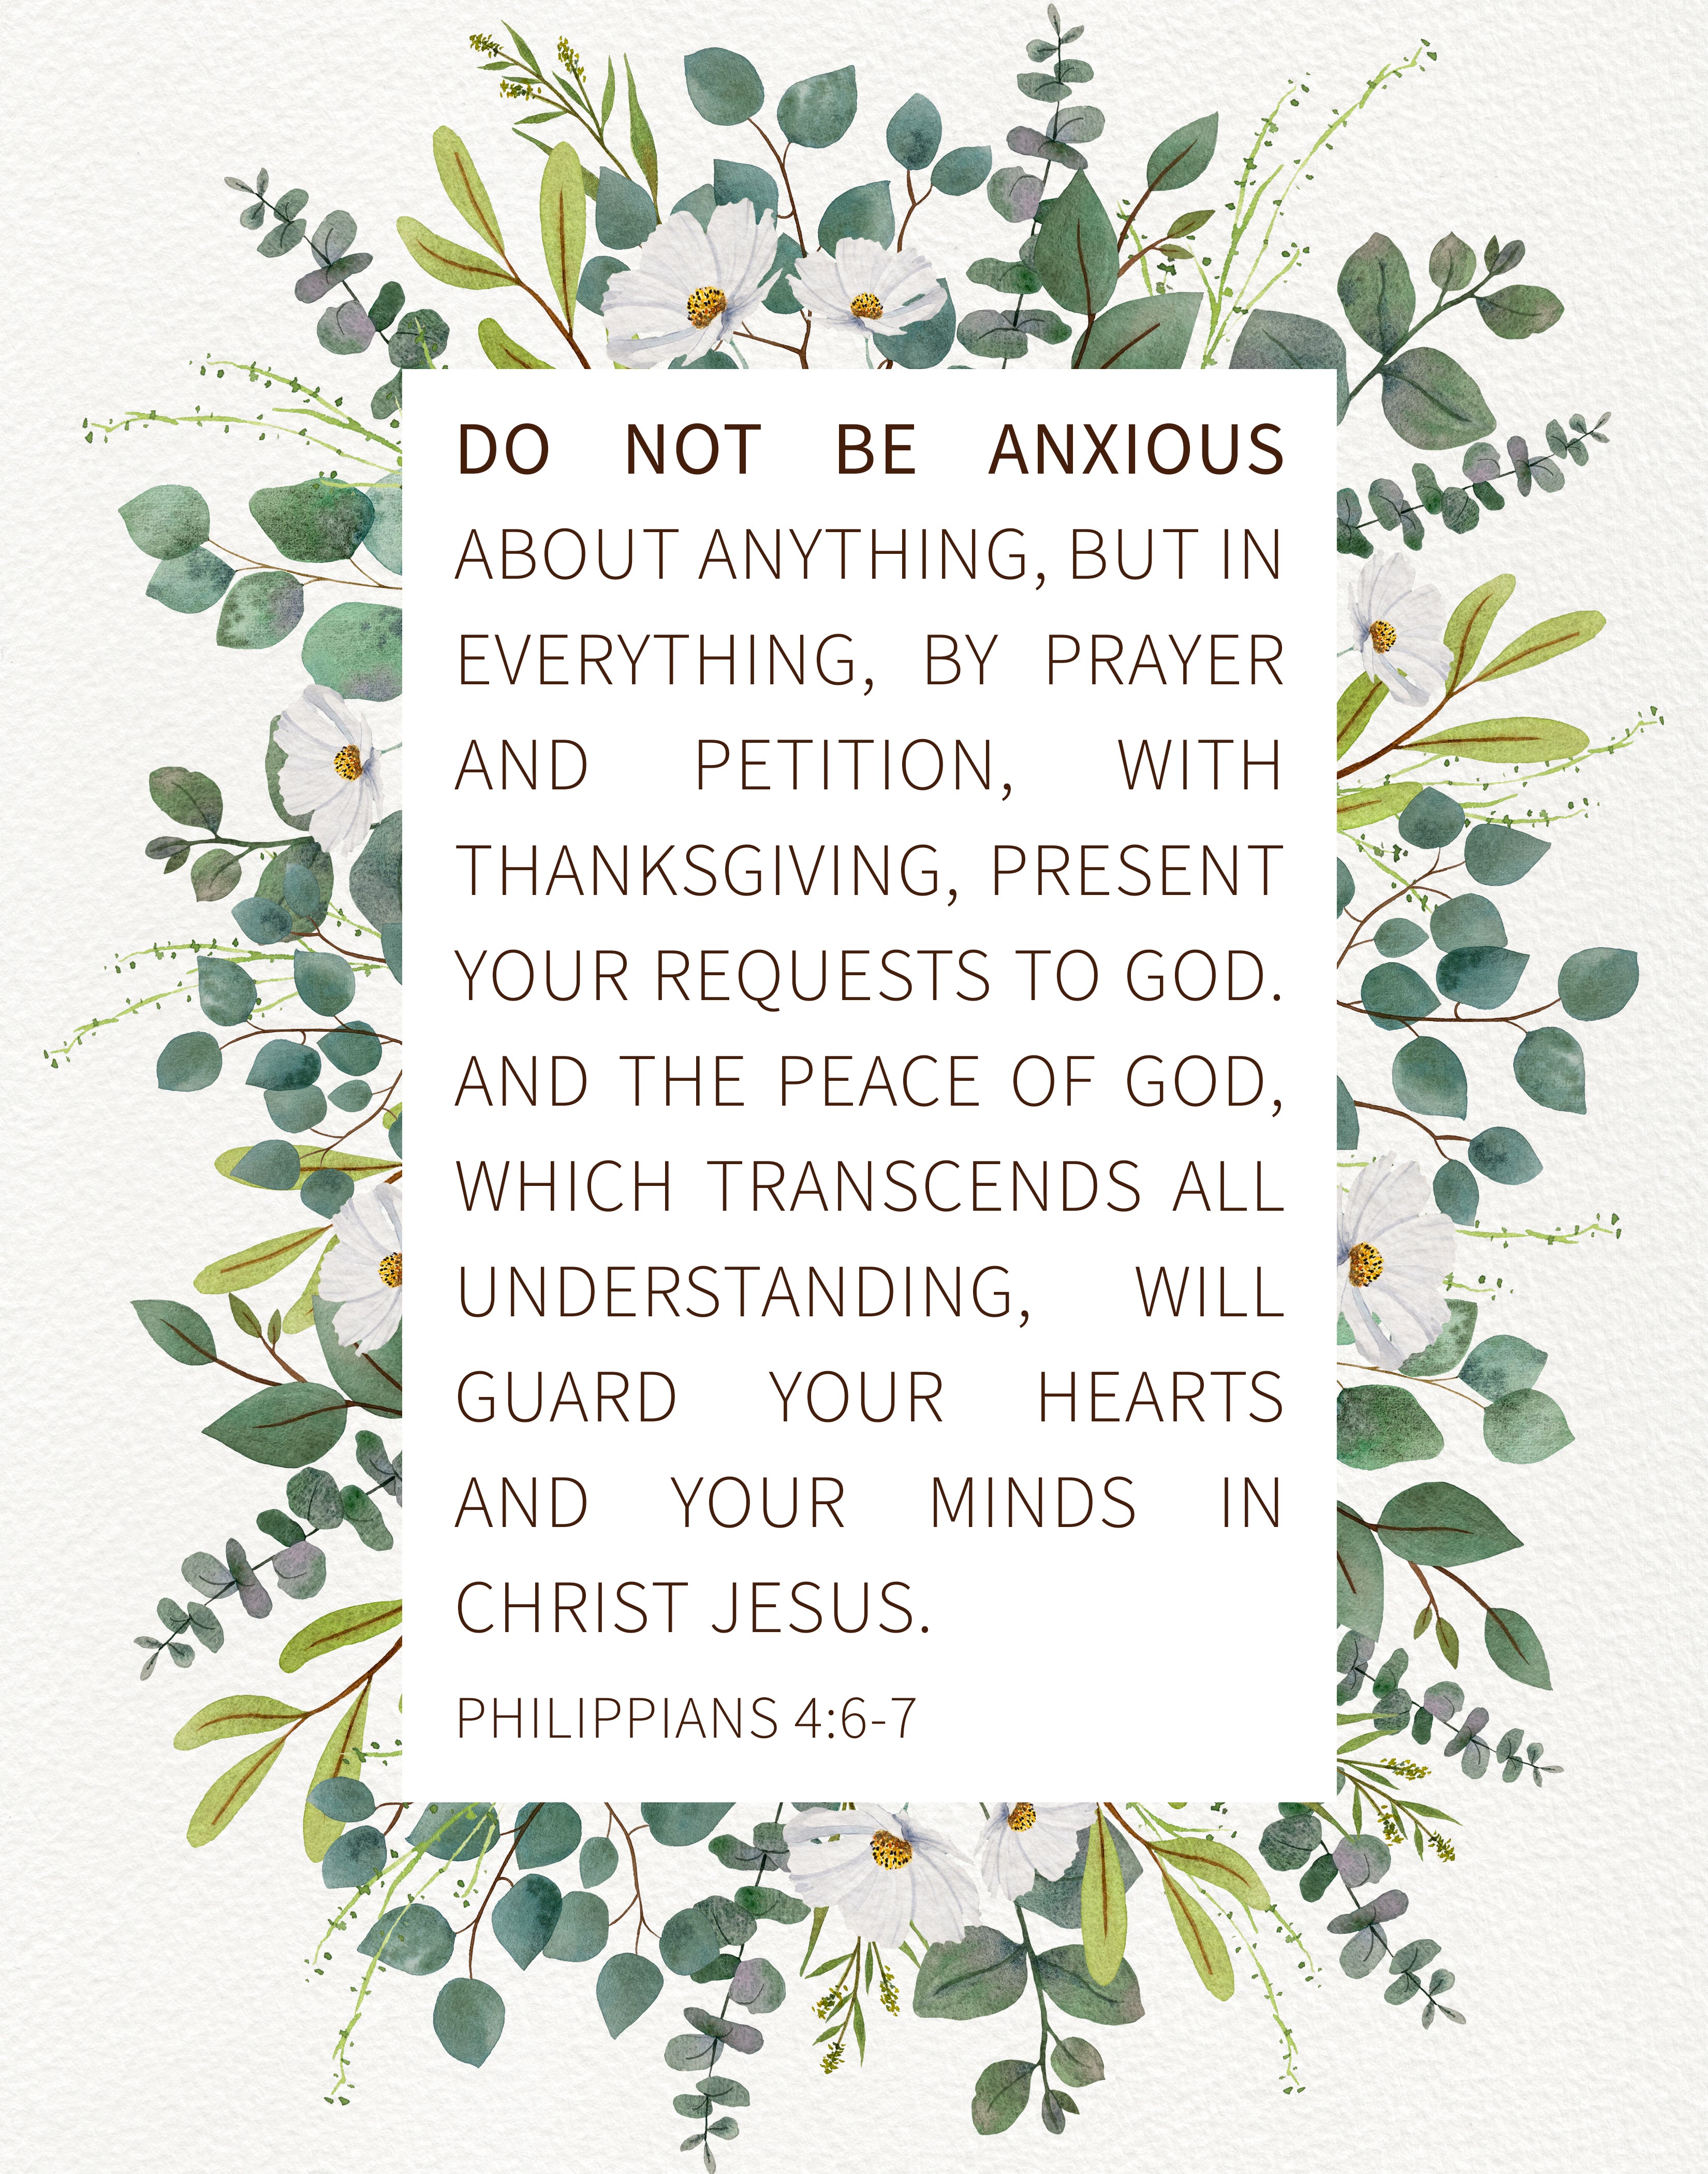 Do Not Be Anxious - Art Print